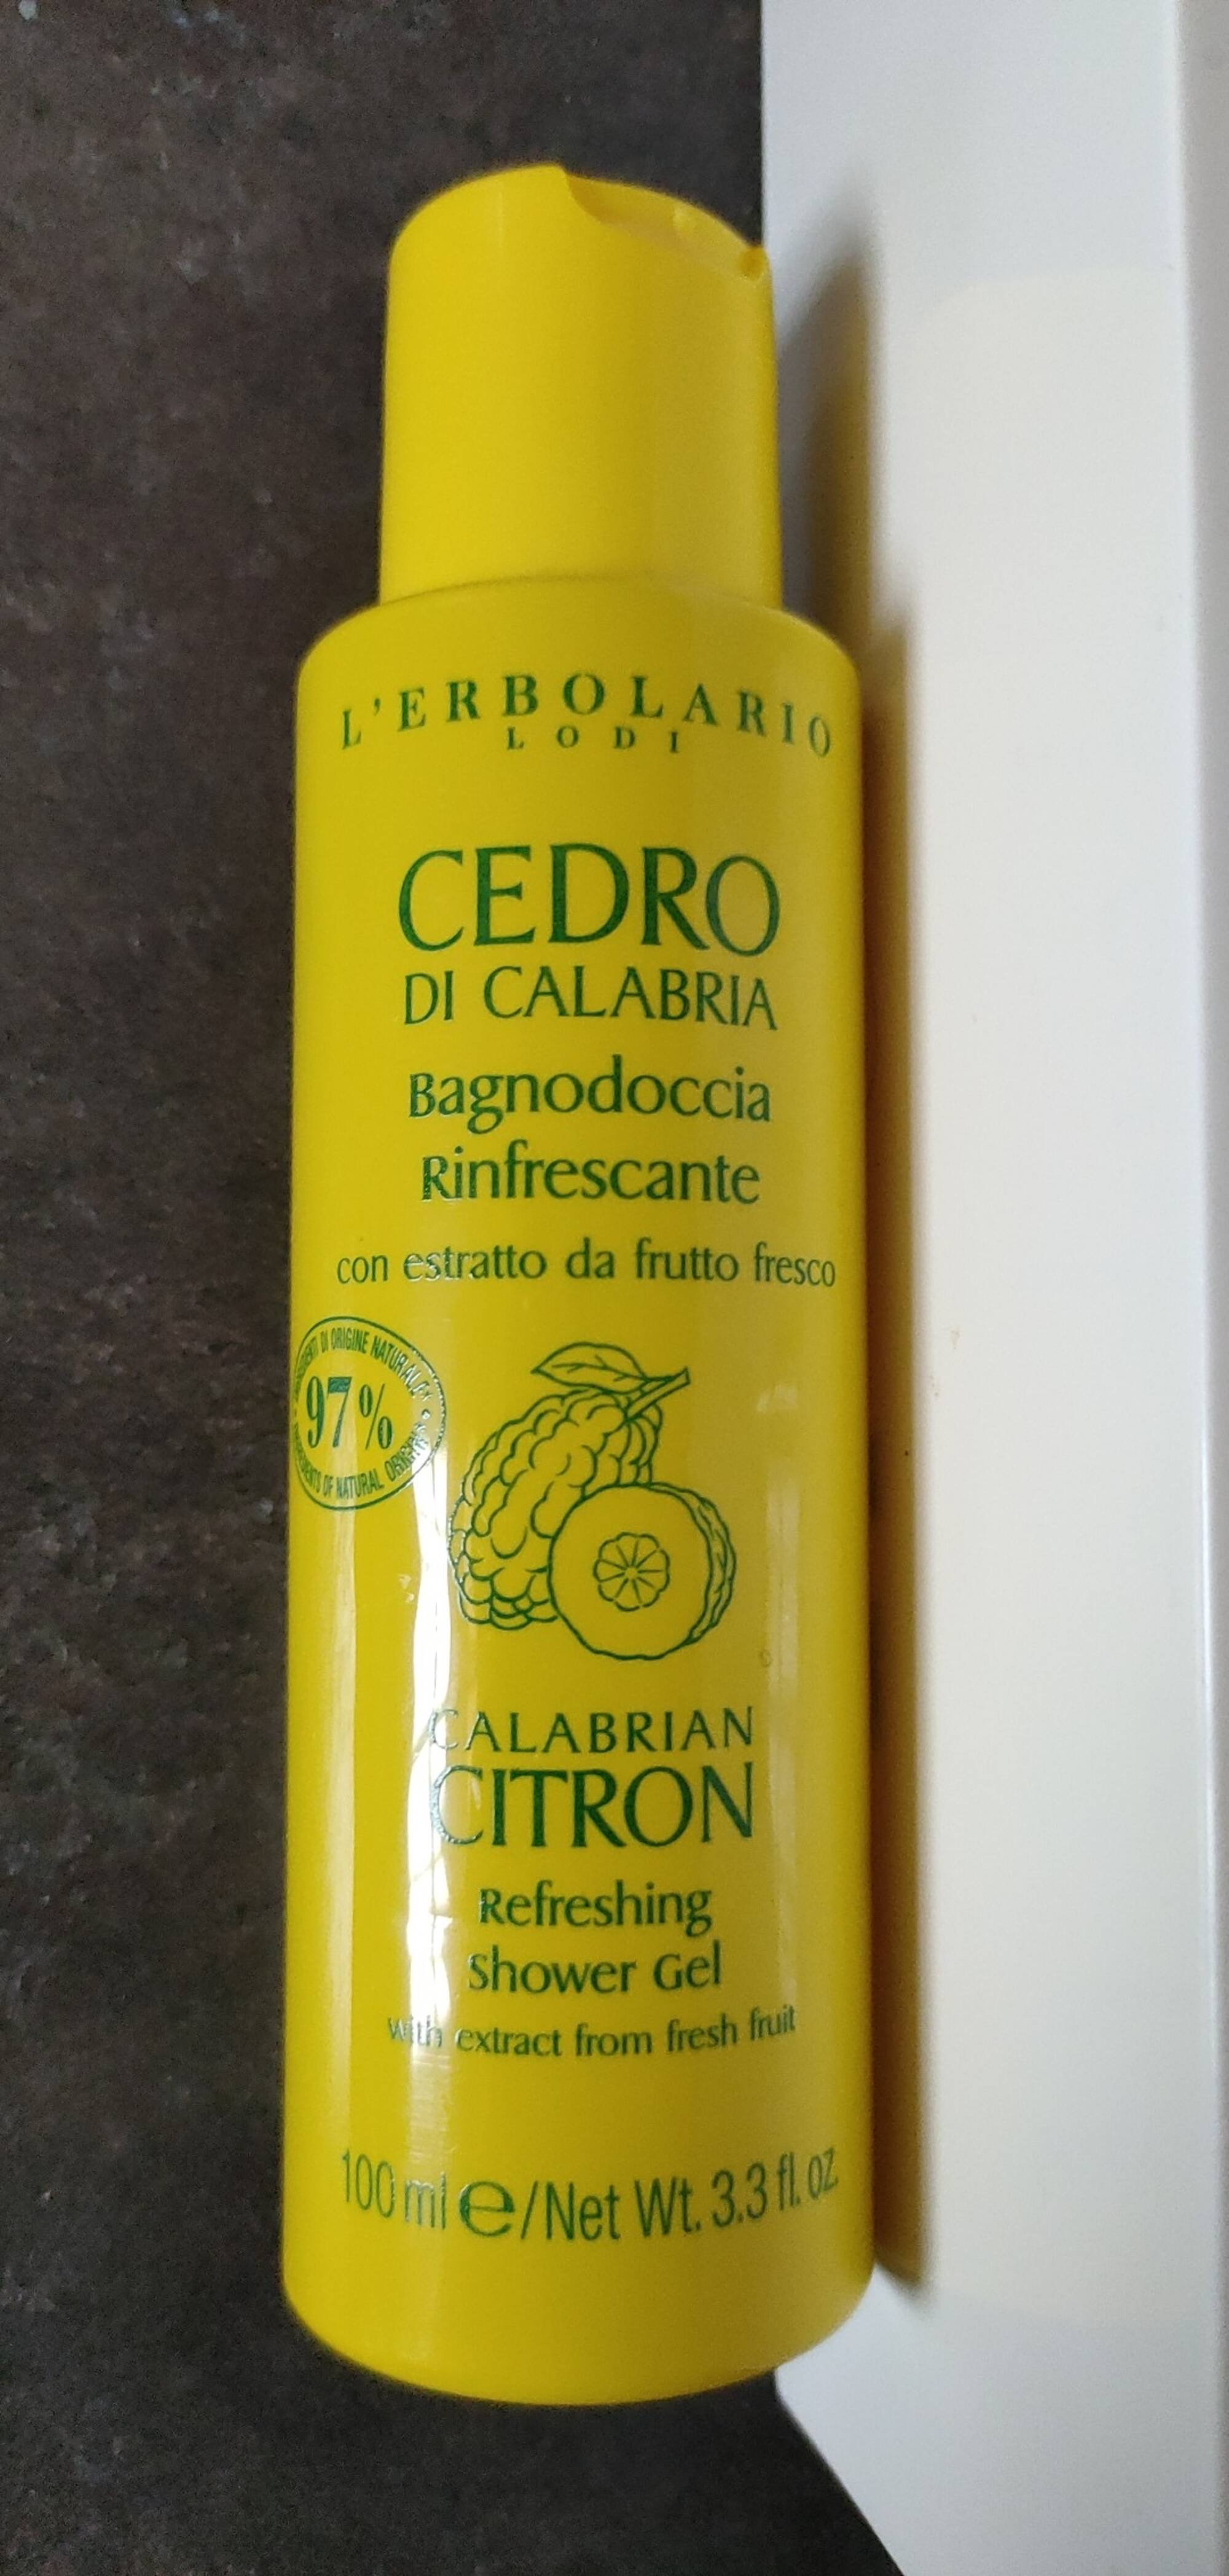 L'ERBOLARIO - Citron - Refreshing shower gel